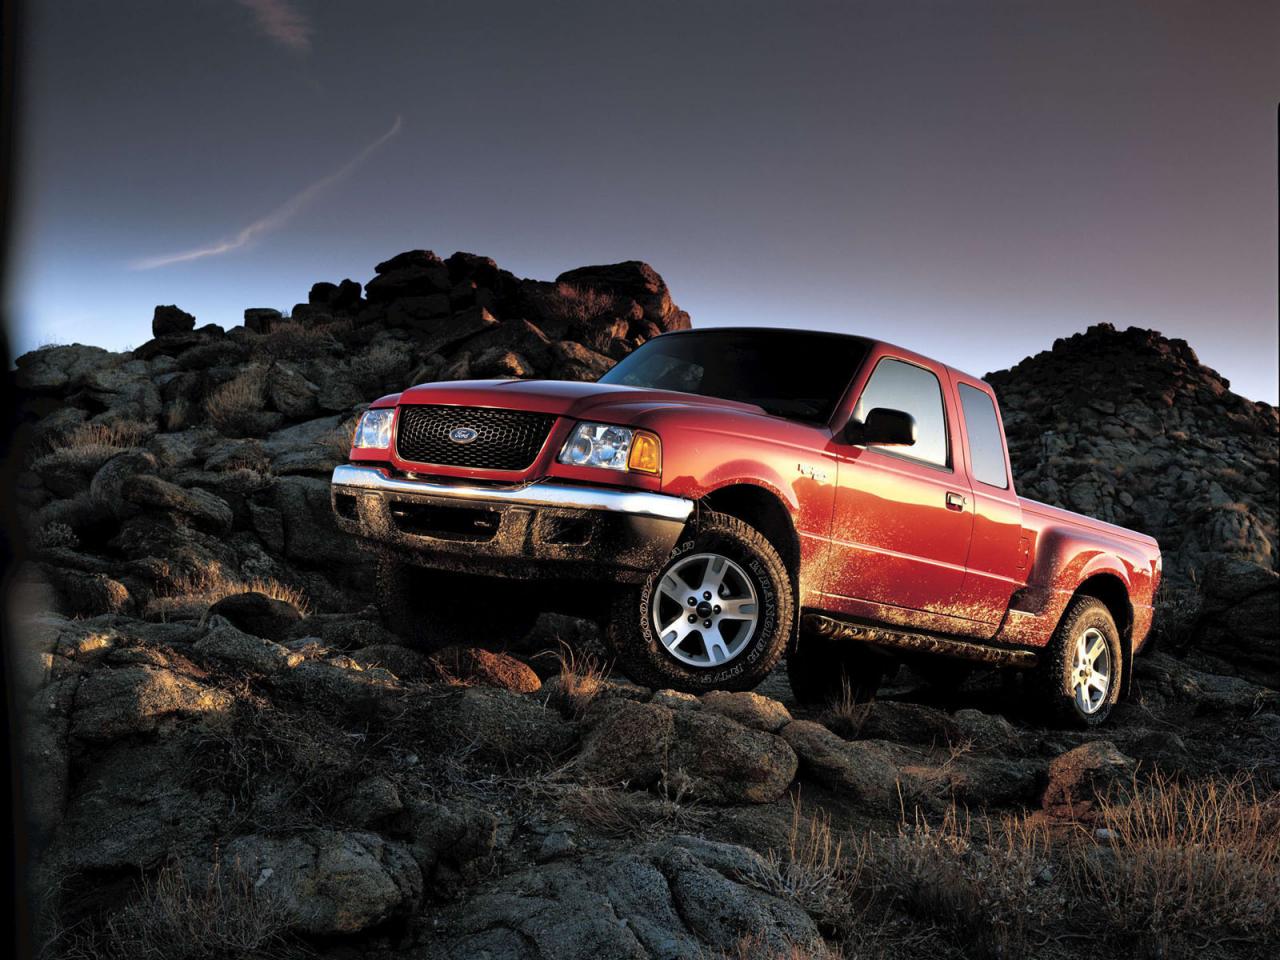 обои Ford Ranger FX4 на камнях фото